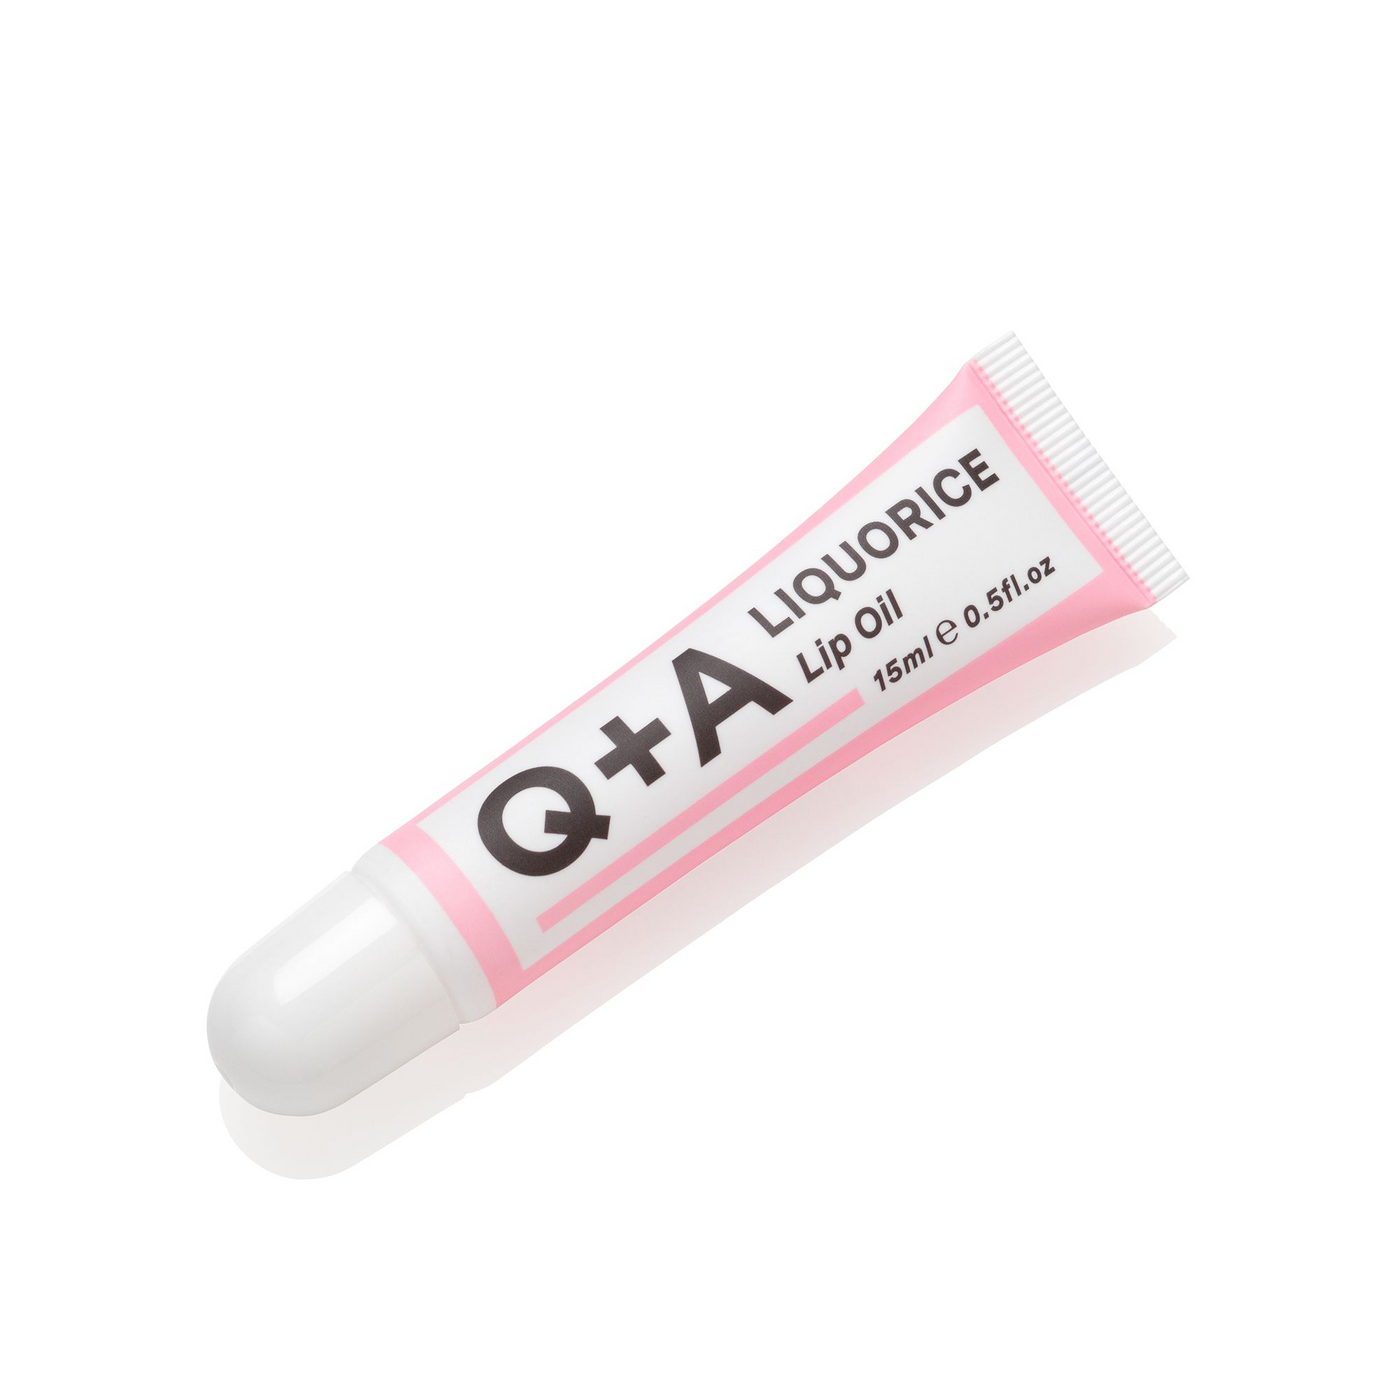 Q+A - Liquorice Lip Oil